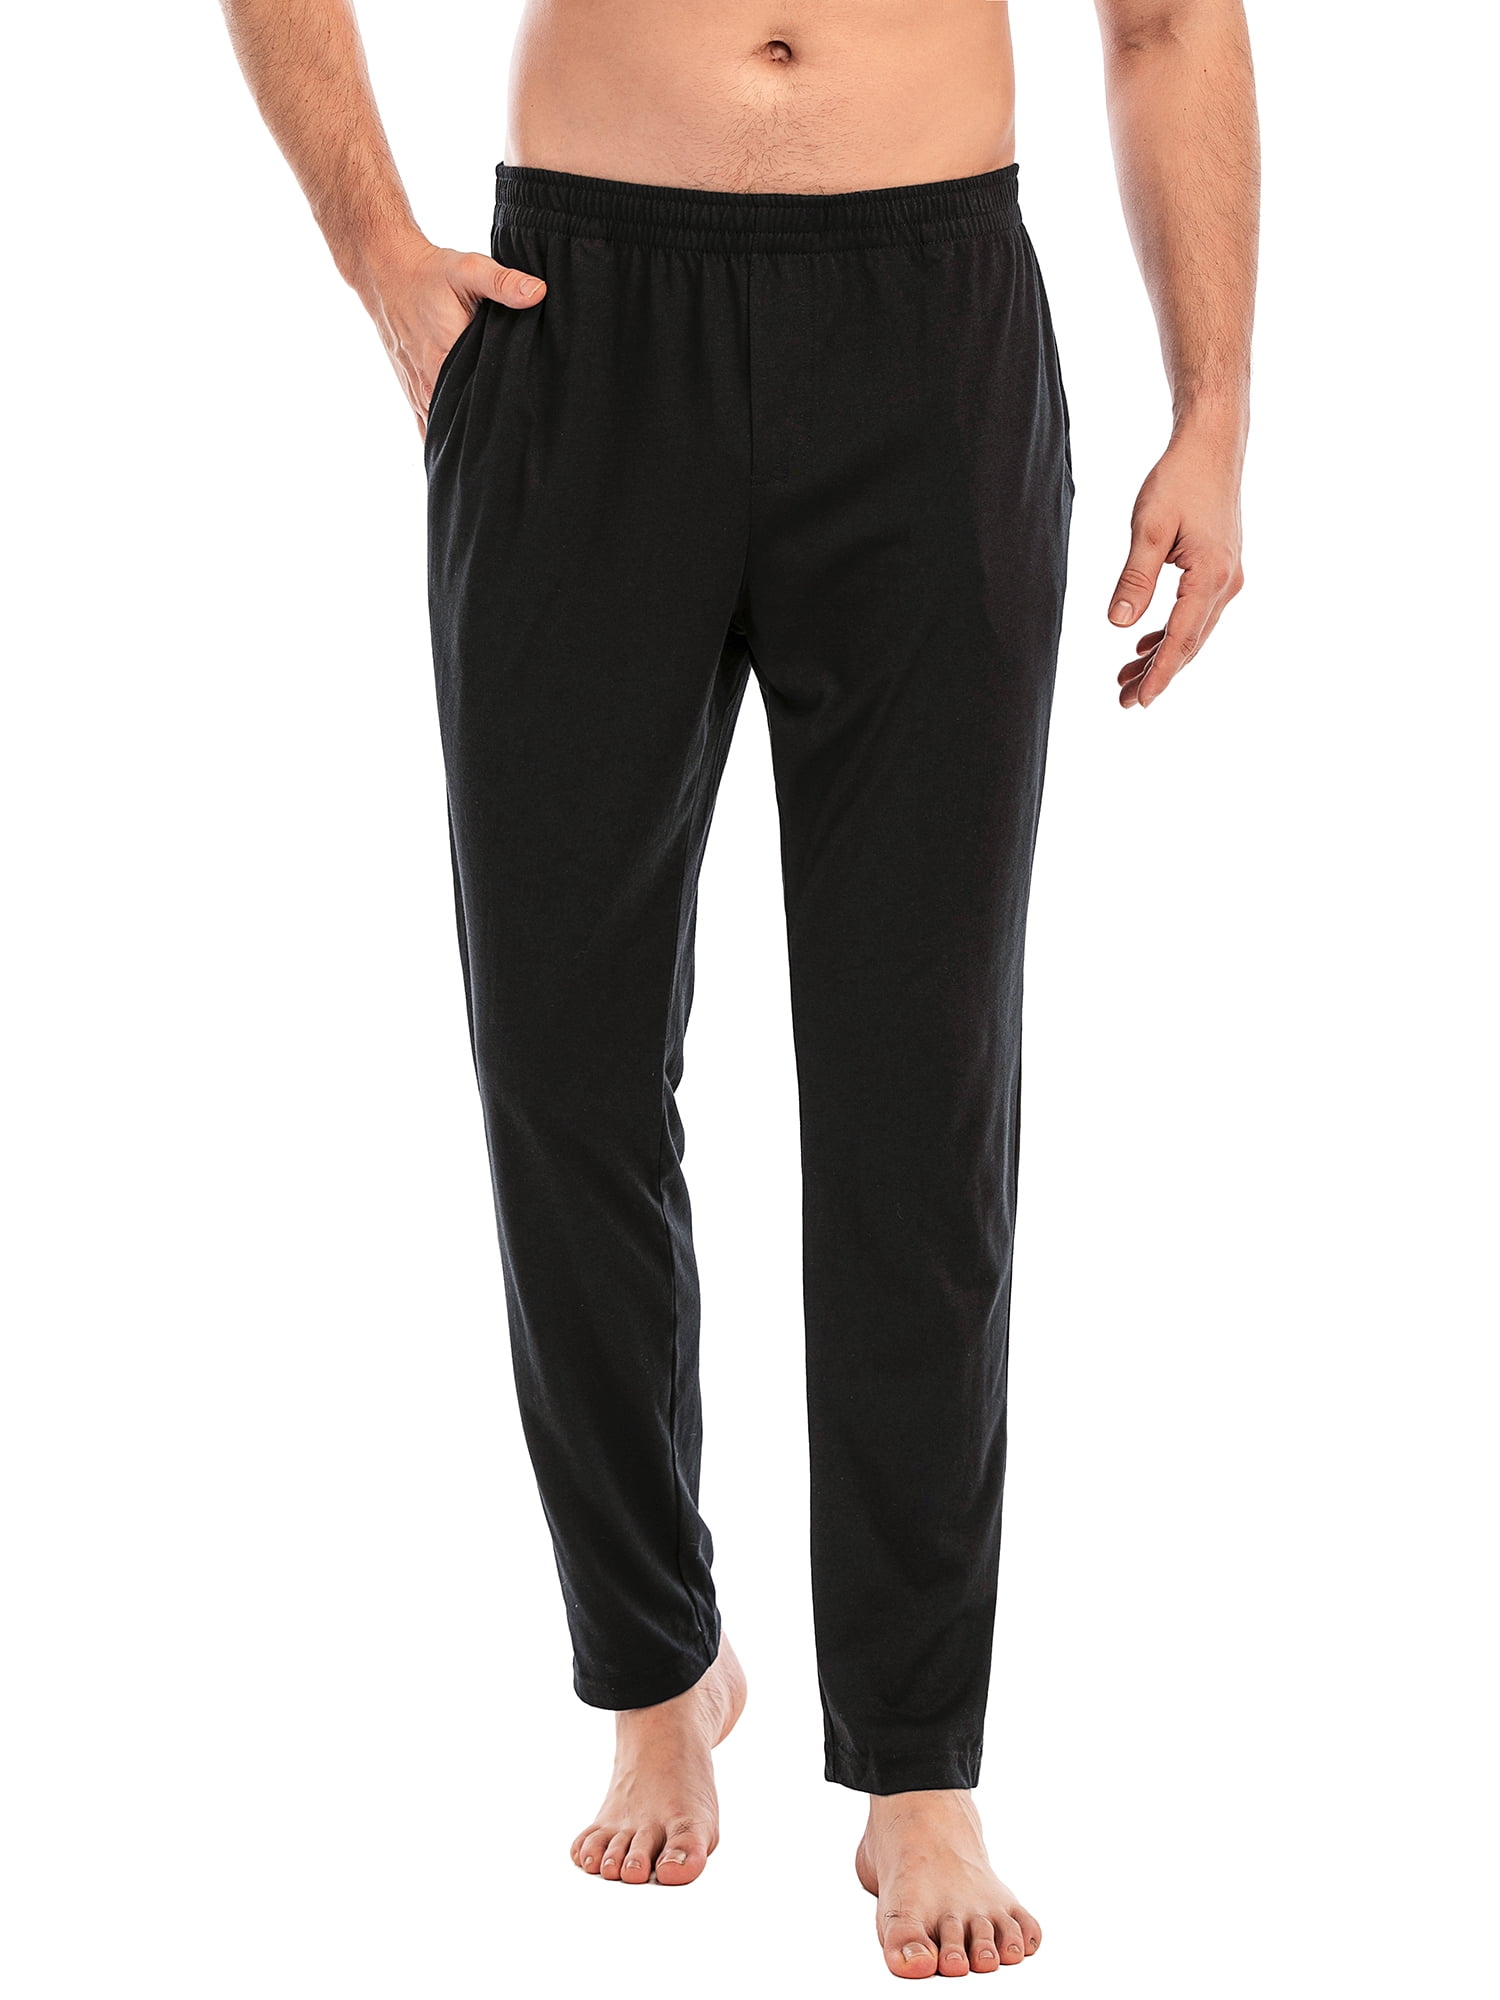 FANNYC Men's Sleep Pants Lounge Pajama Bottoms Soft Quick Dry Sleepwear  Elastic Solid Color Sleepwear Nightgown Pajamas Pants Trousers With Pockets 